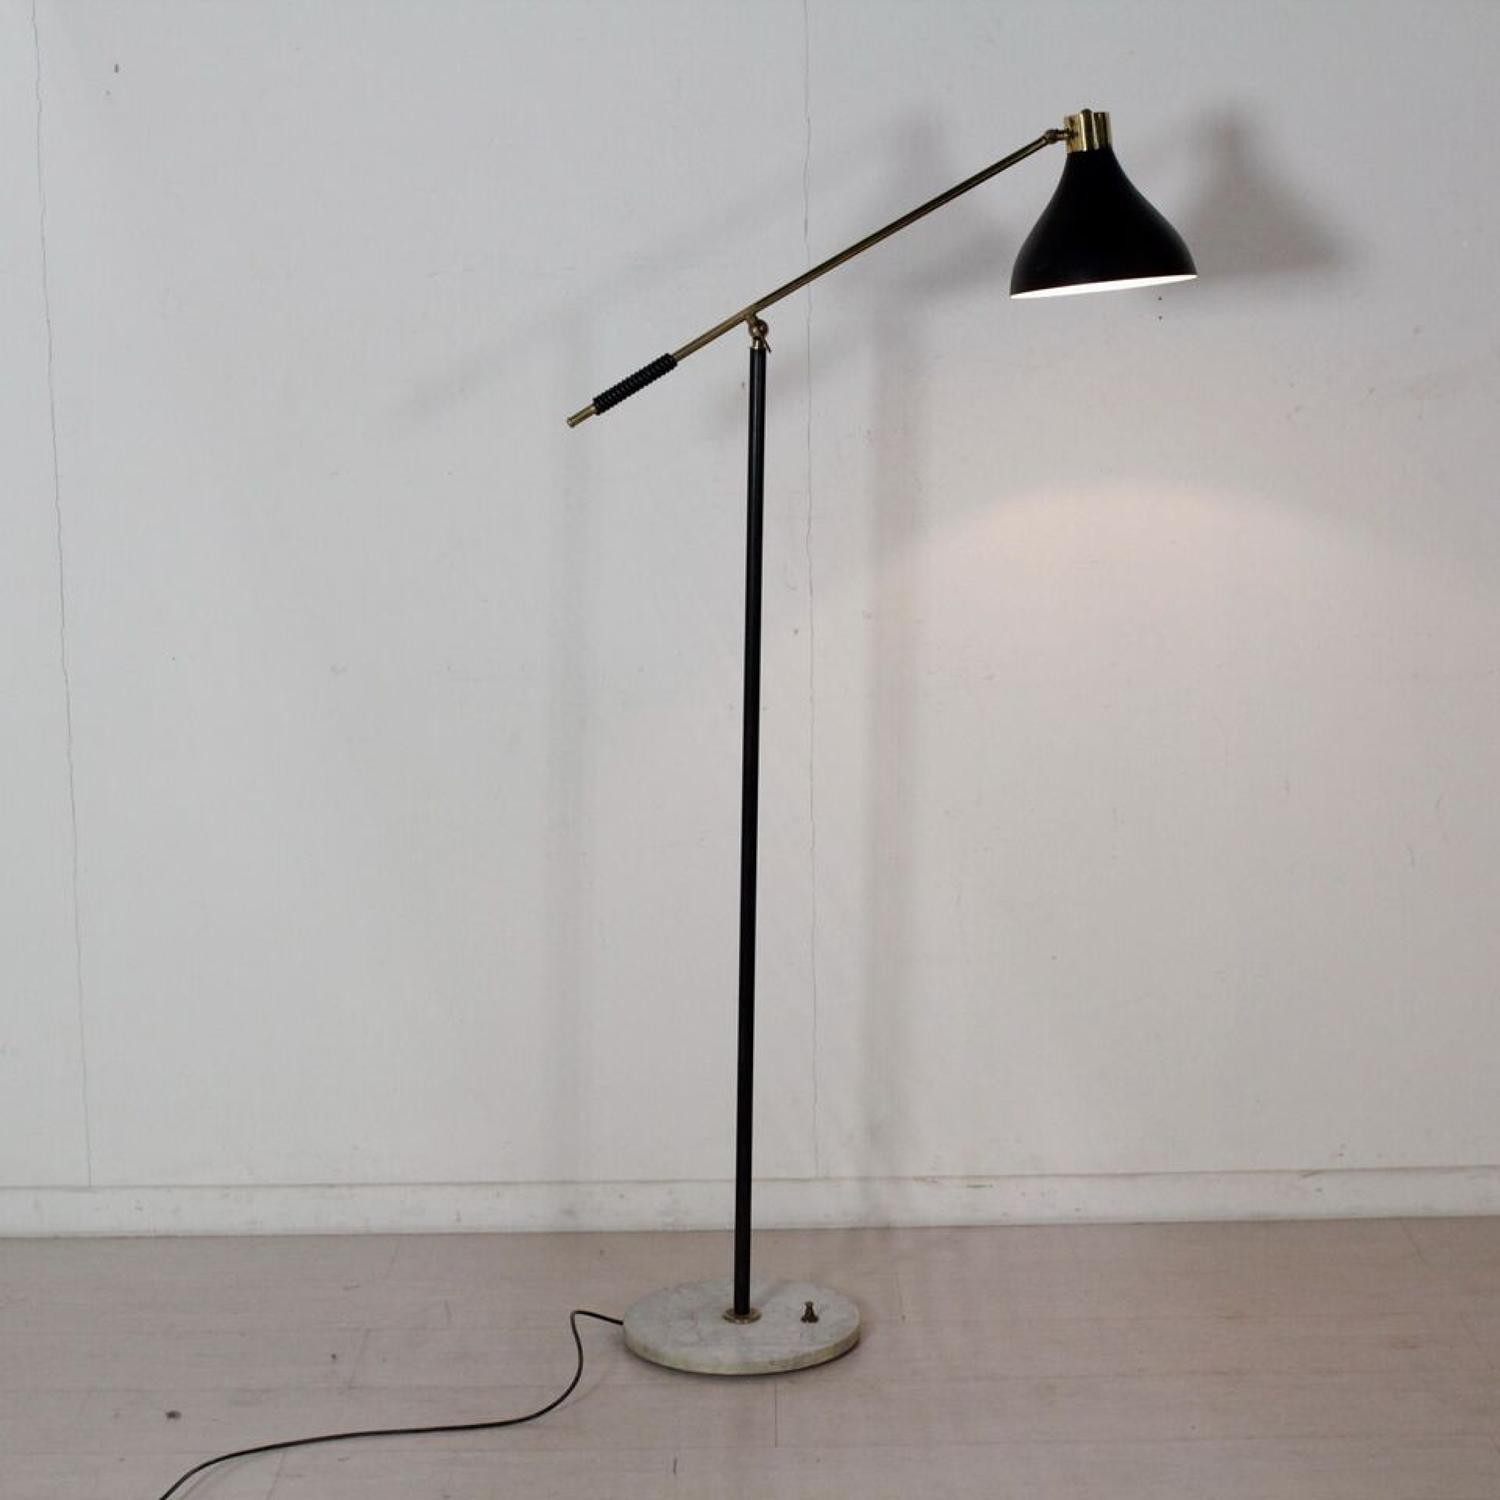 Stilux standing lamp